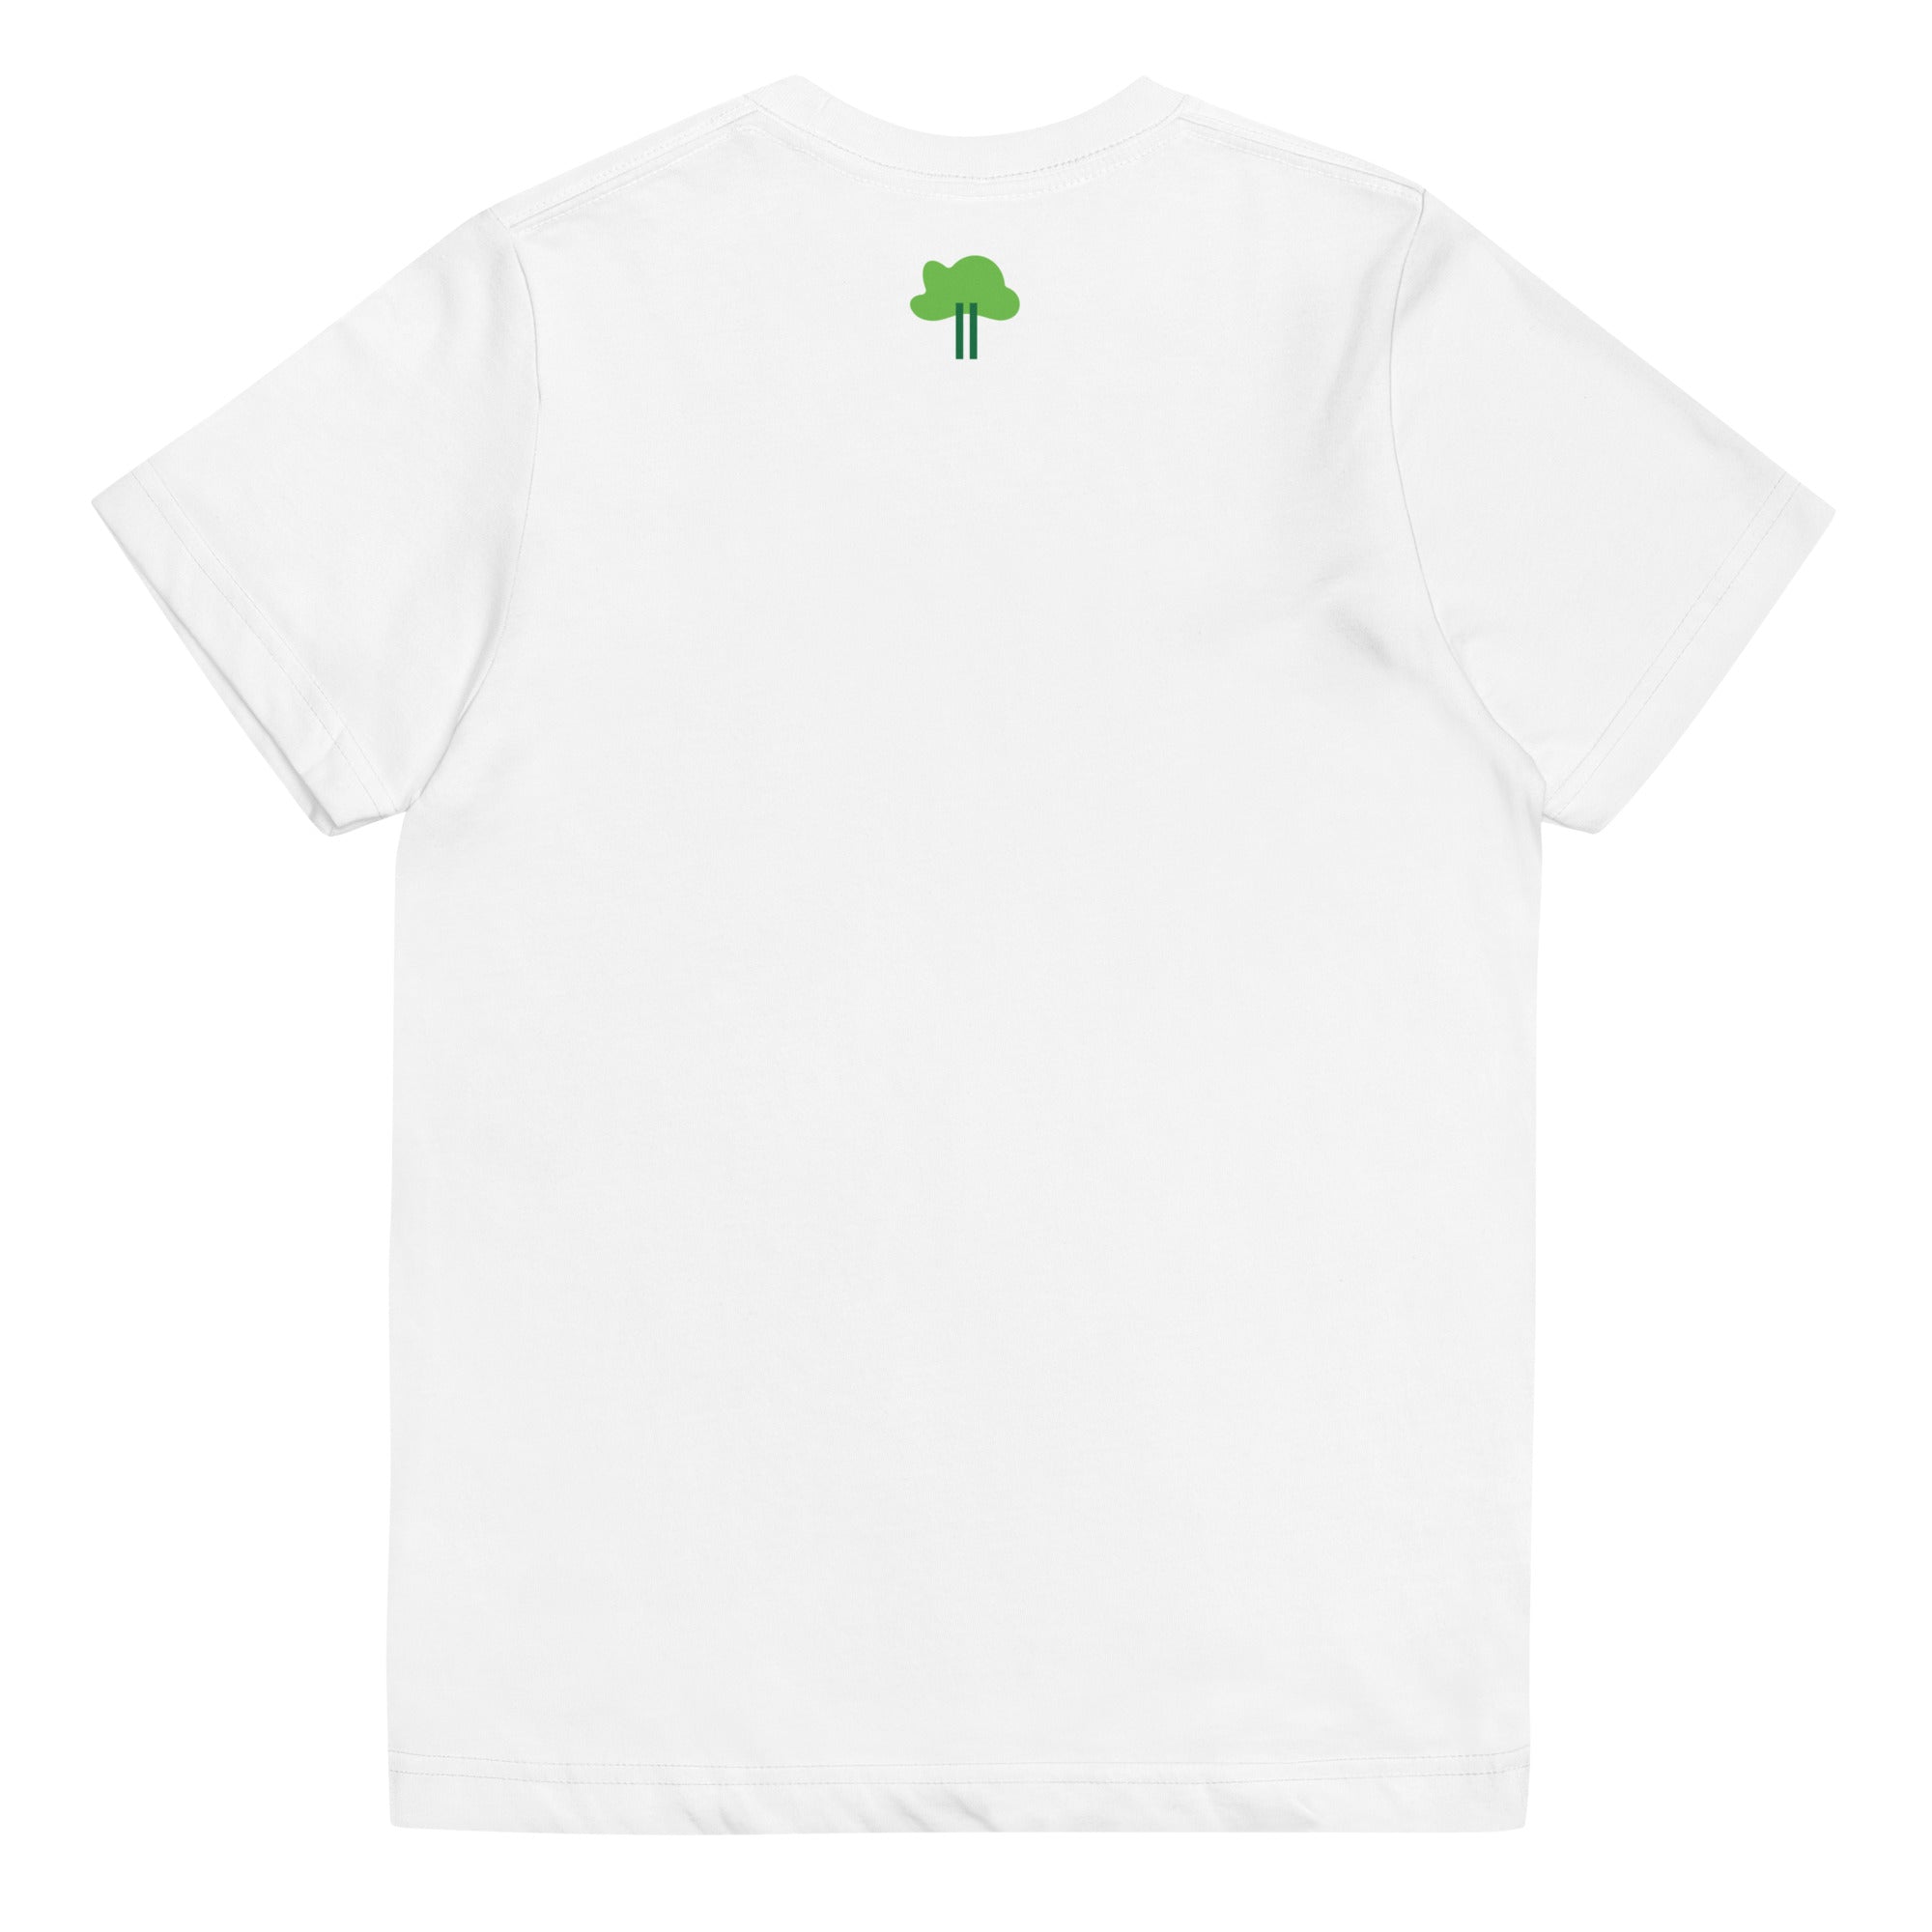 I Temp - Bosque - FK | Youth jersey t-shirt